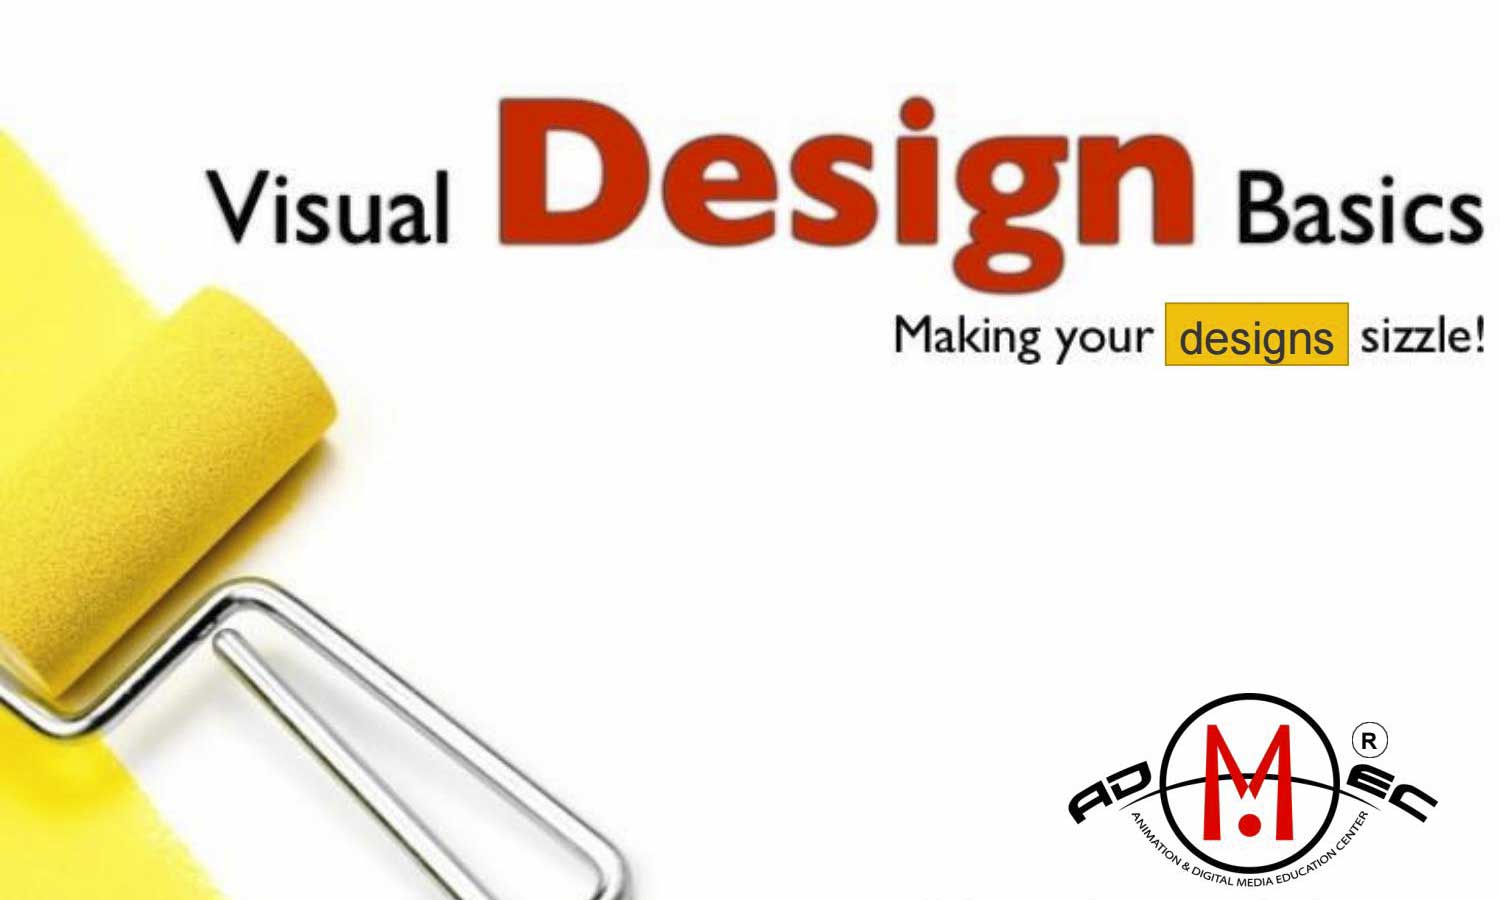 Visual Design Basics Course